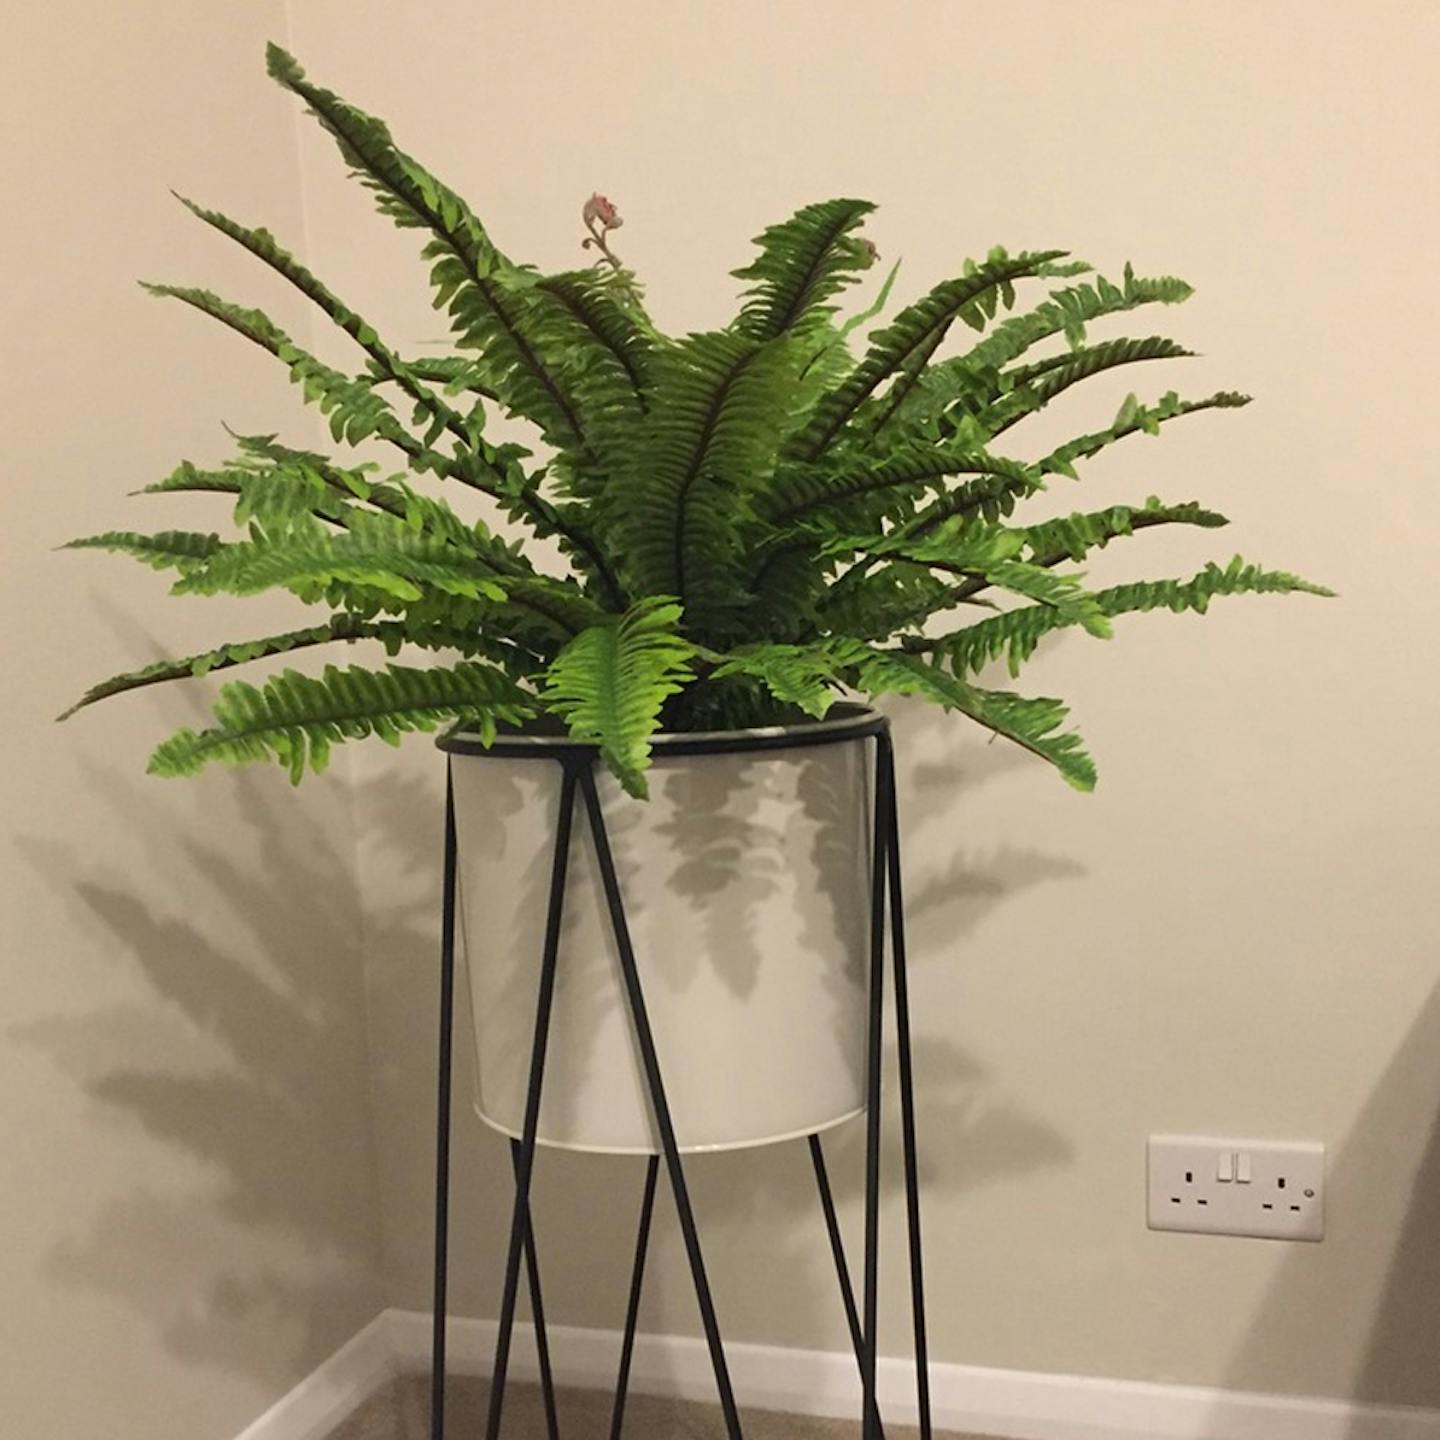 Artificial Boston fern in potstand in corner of room